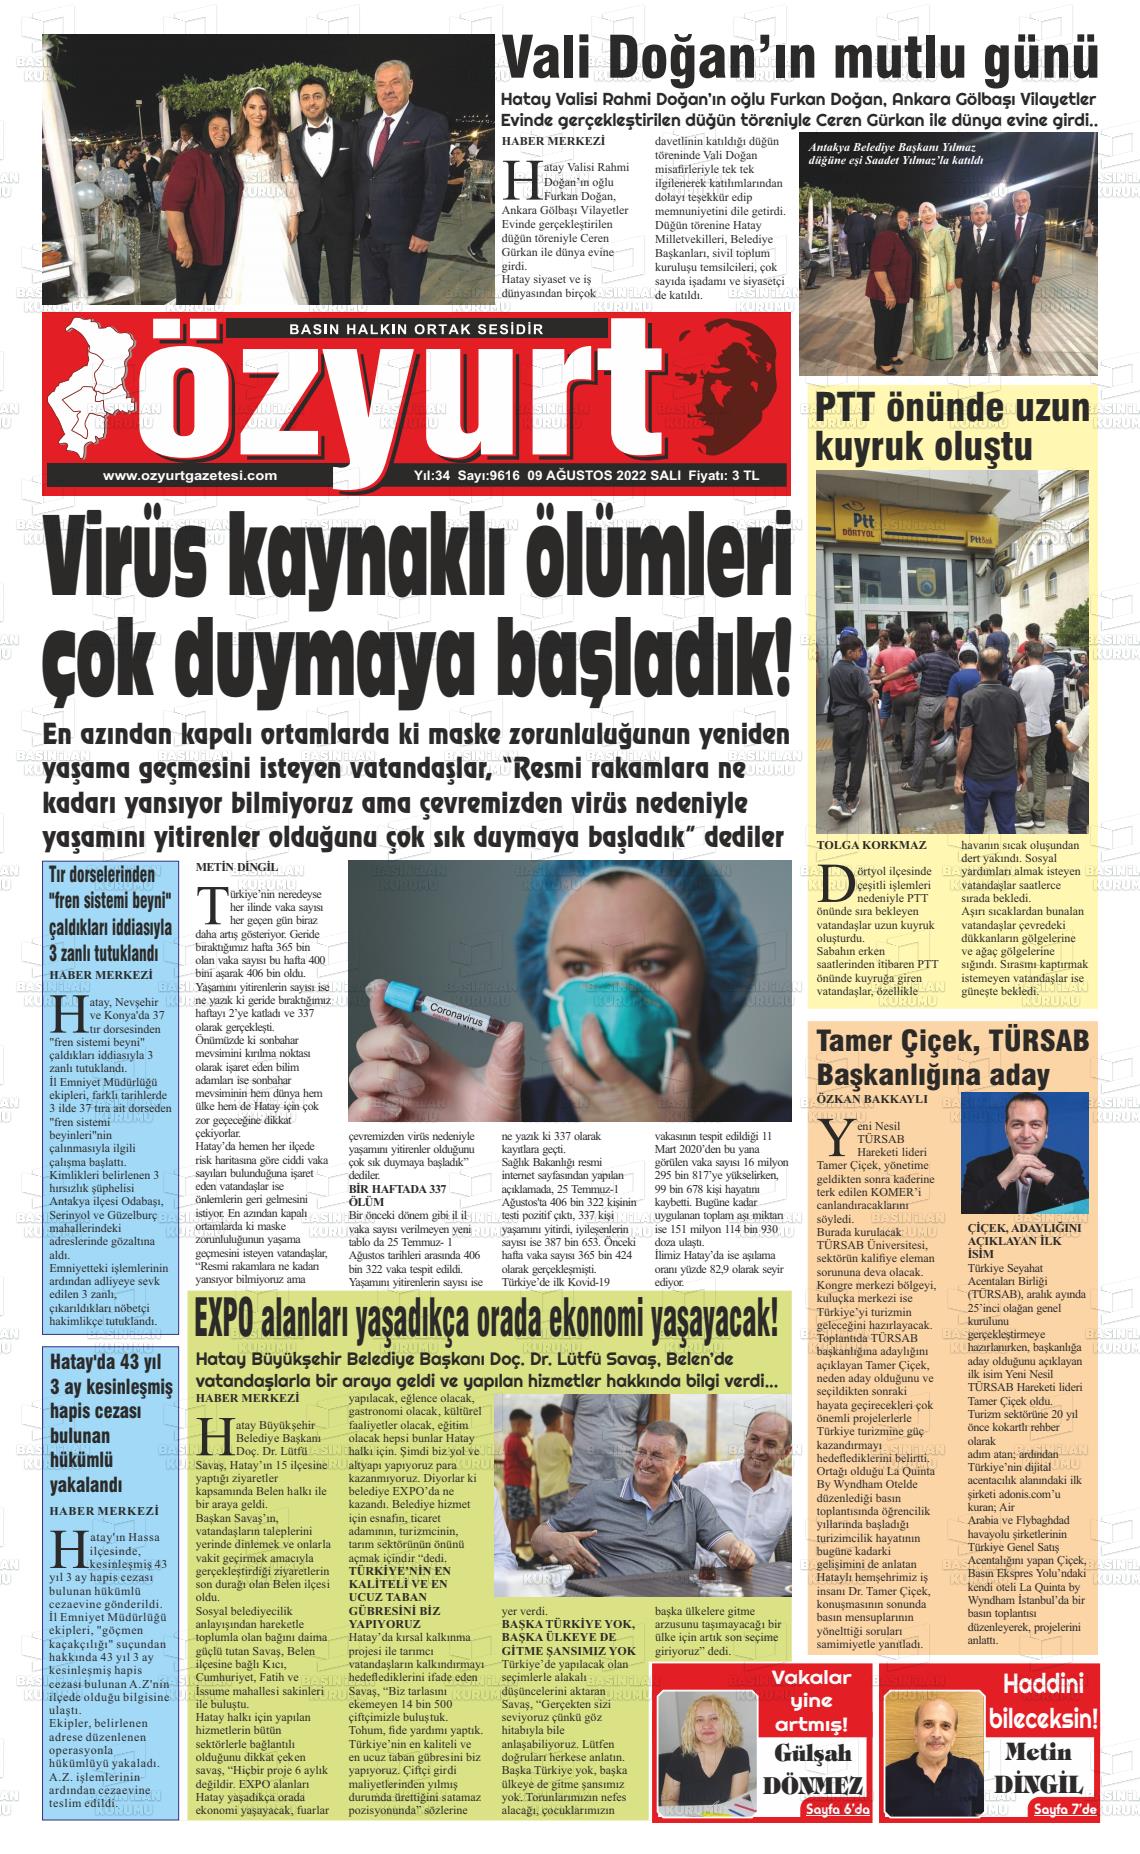 09 Ağustos 2022 Özyurt Gazete Manşeti